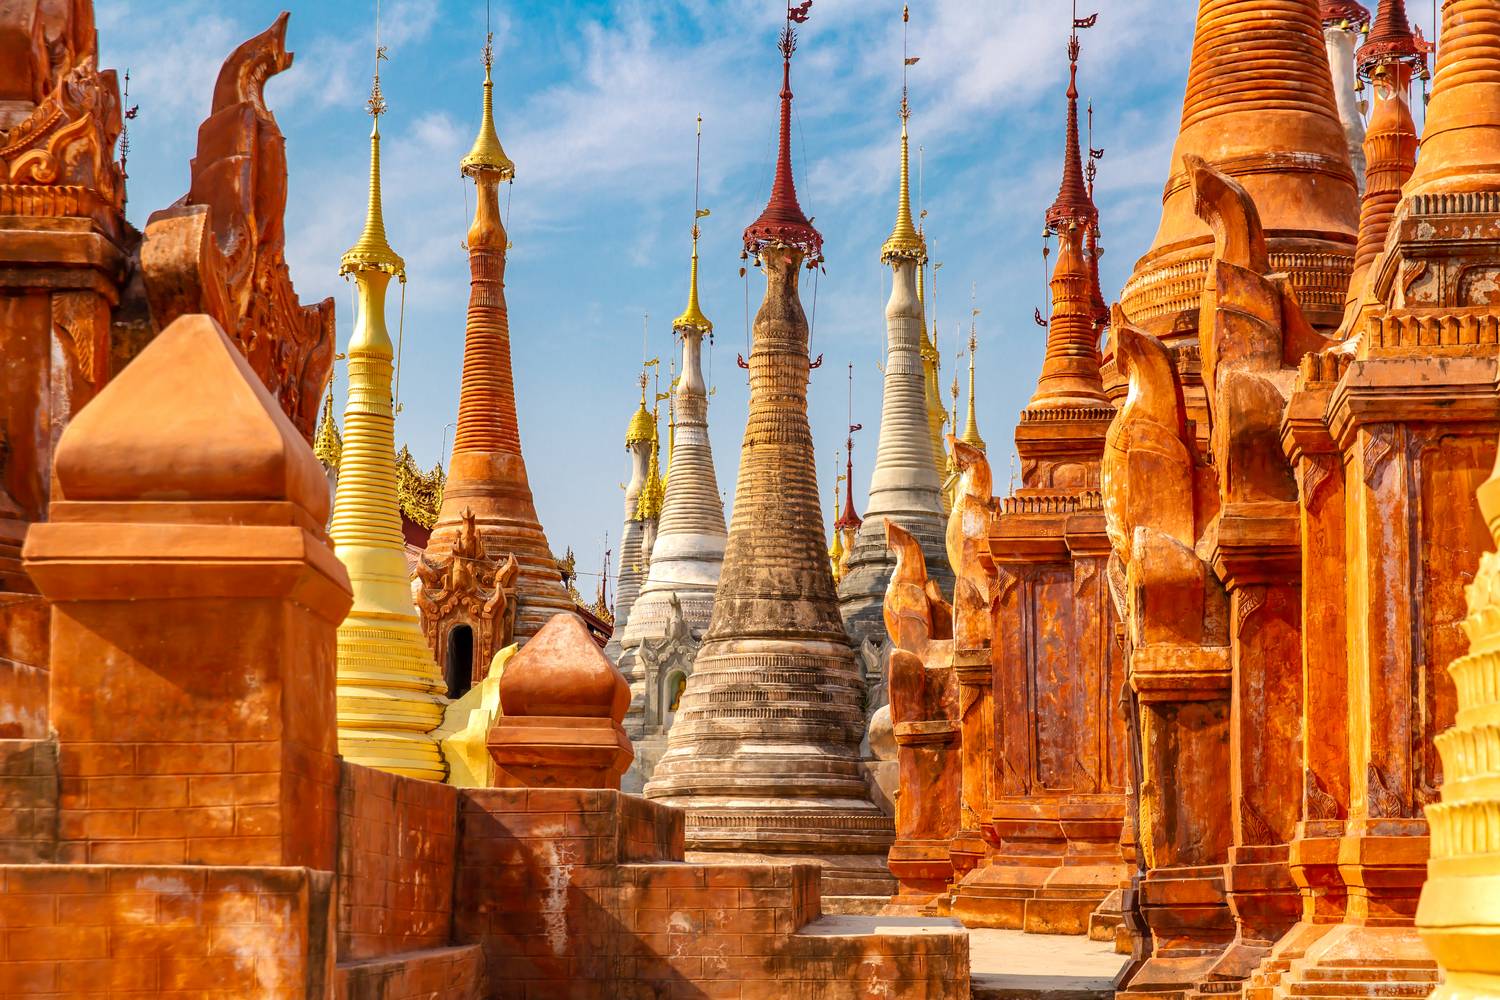 Tempel und Pagoden am Inle See in Myanmar (Burma) van Miro May